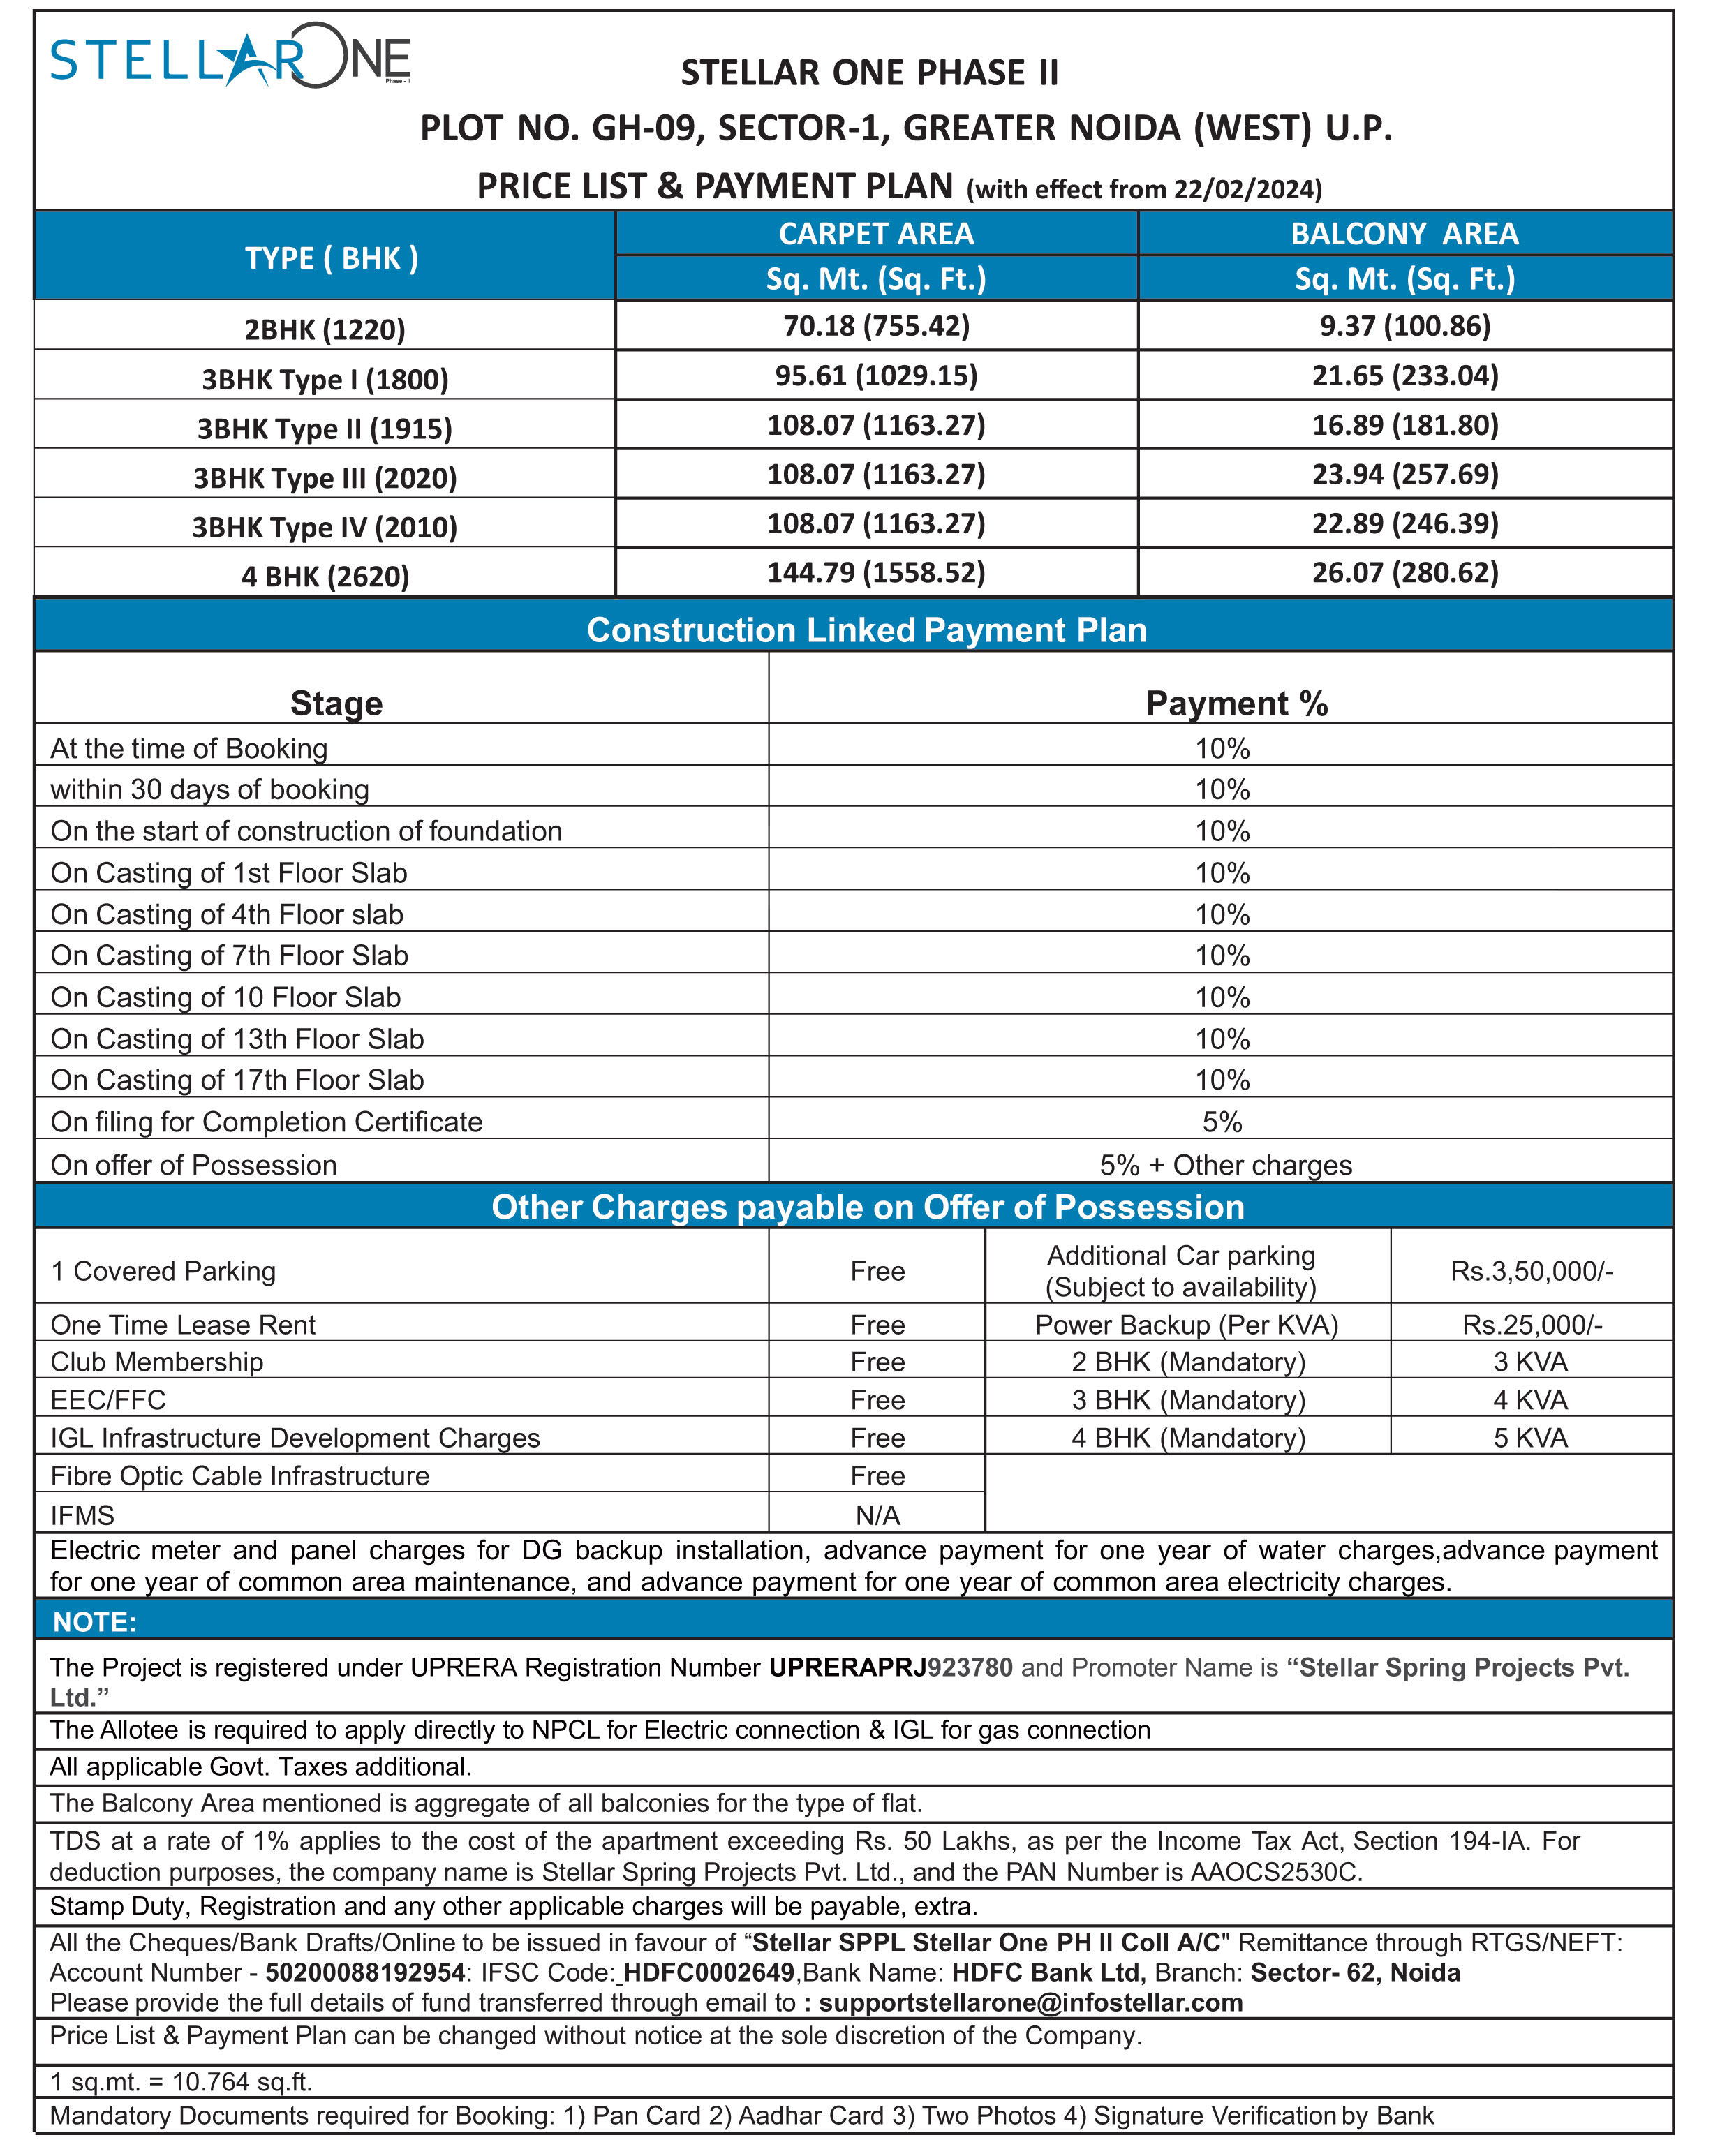 Stellar One Phase 2 Price List - Actual Flats Price 2024